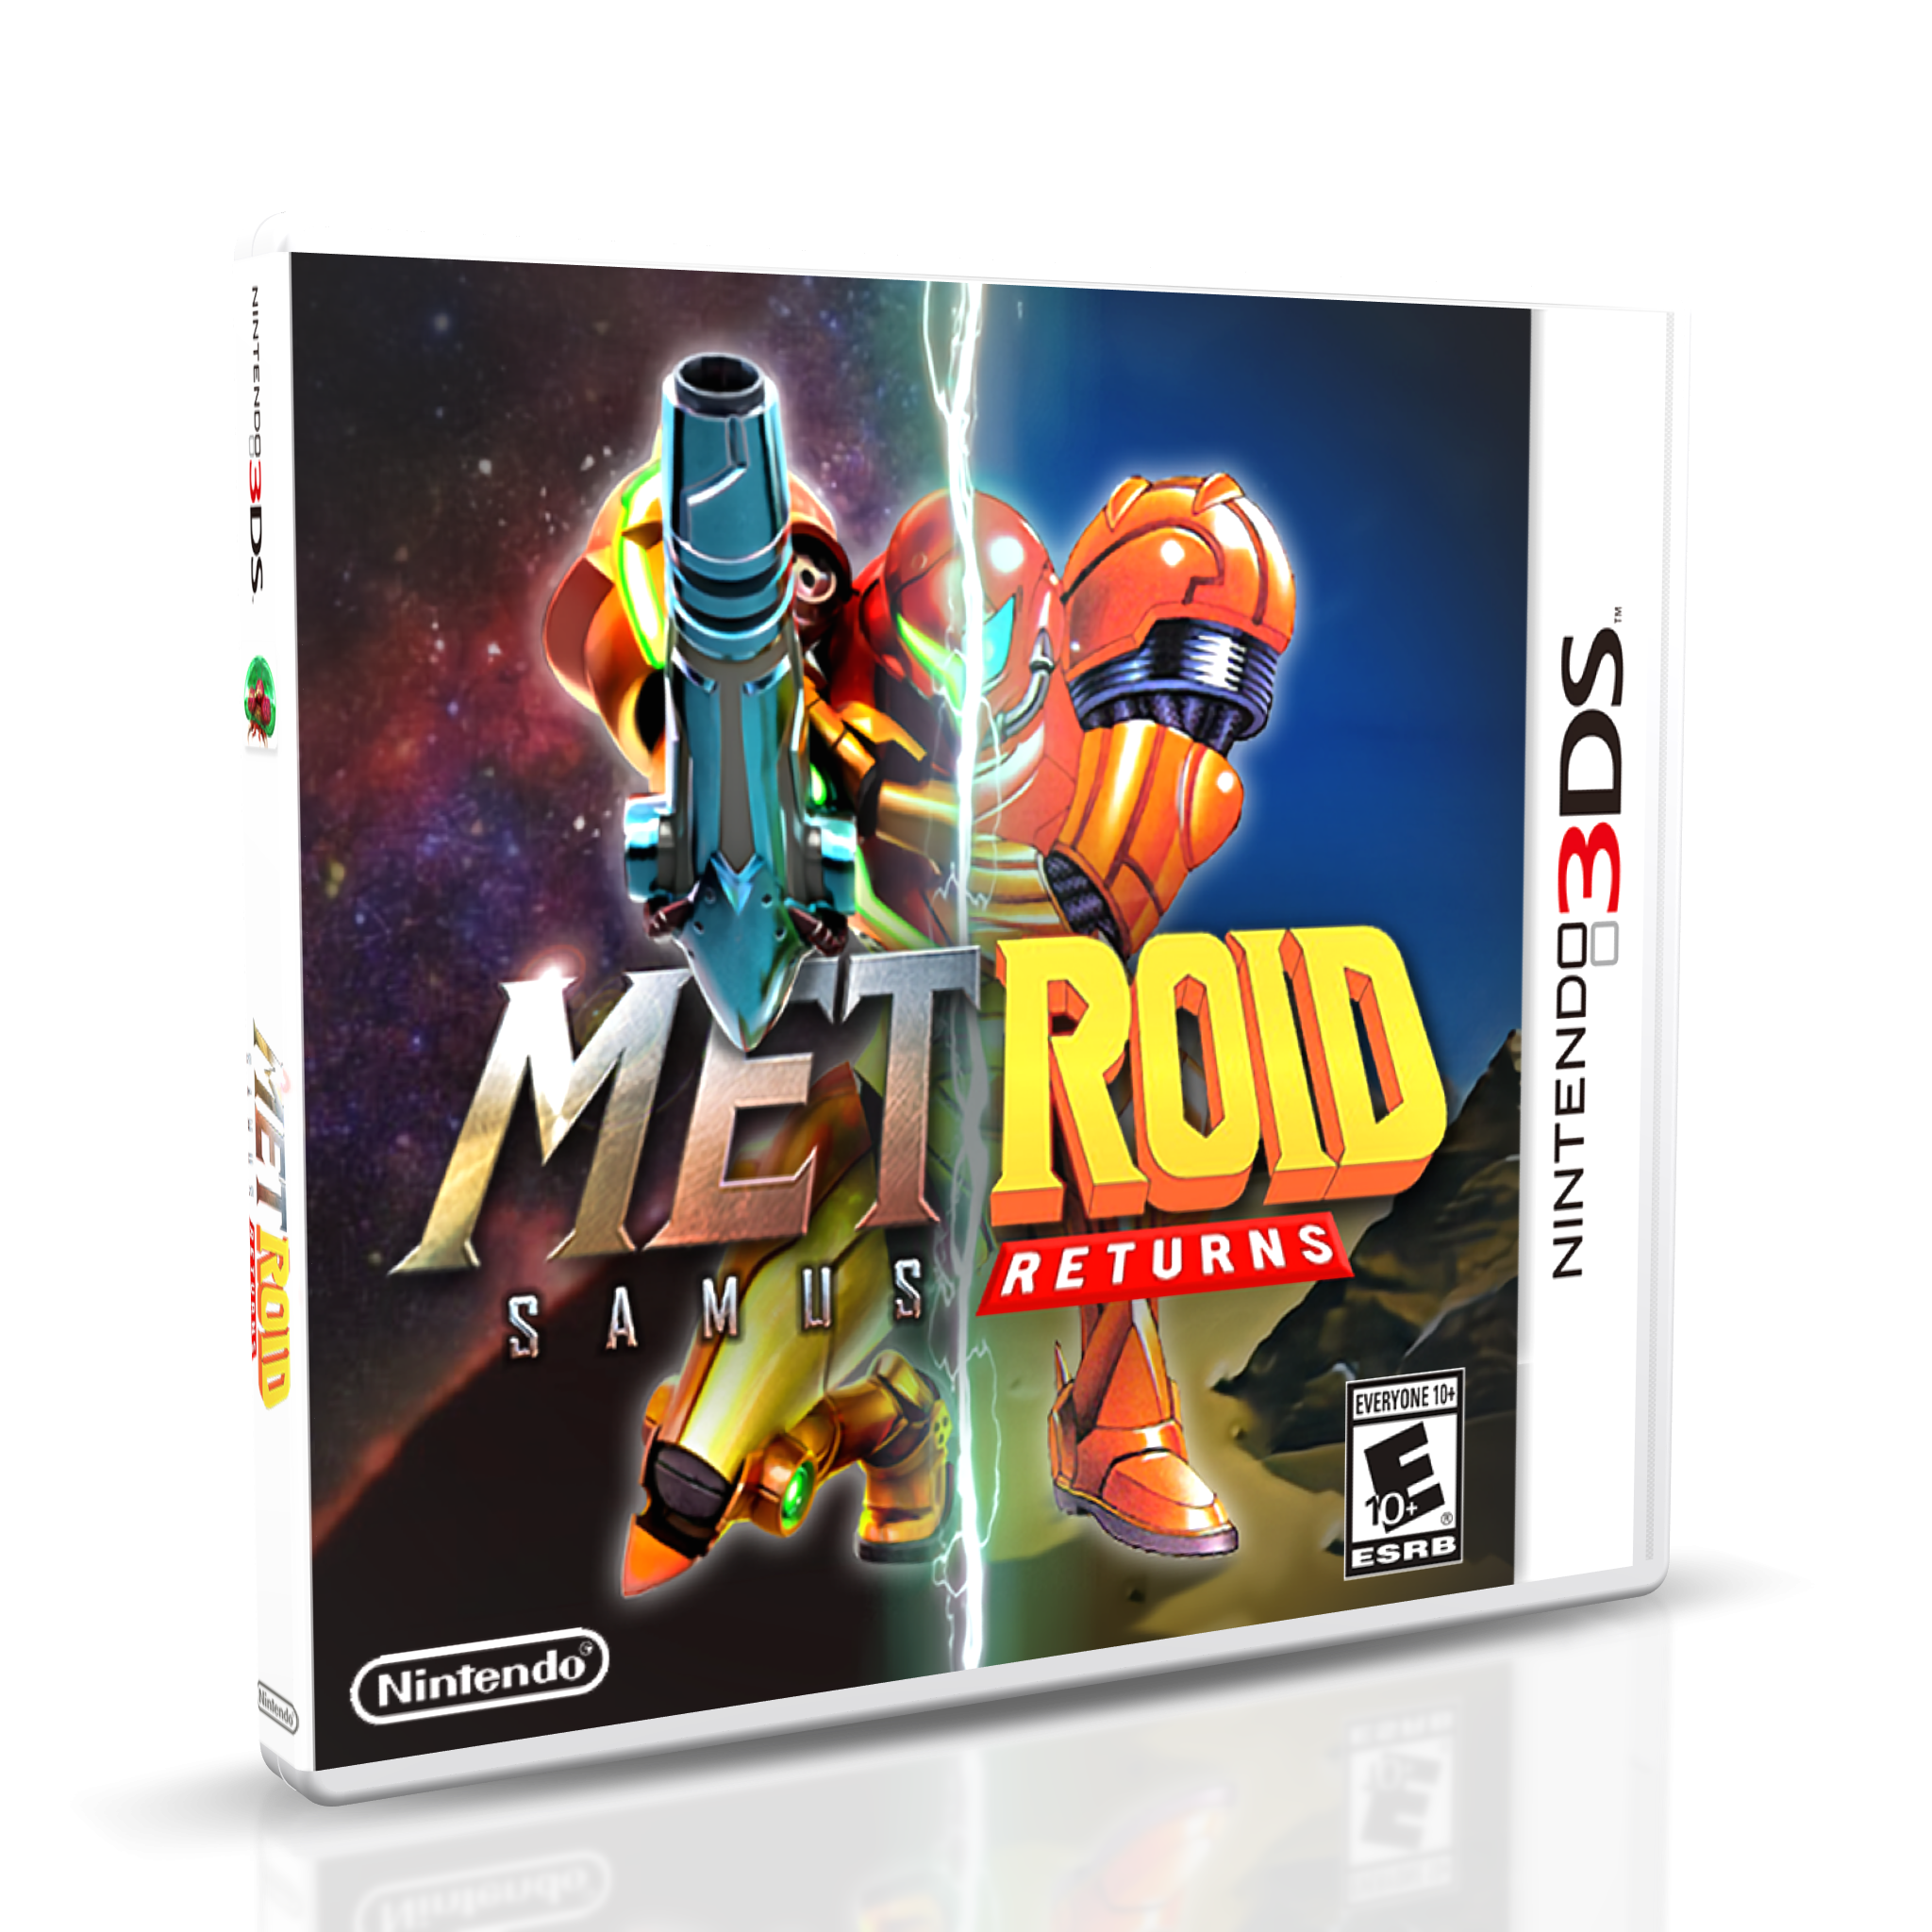 Metroid: Samus Returns box cover